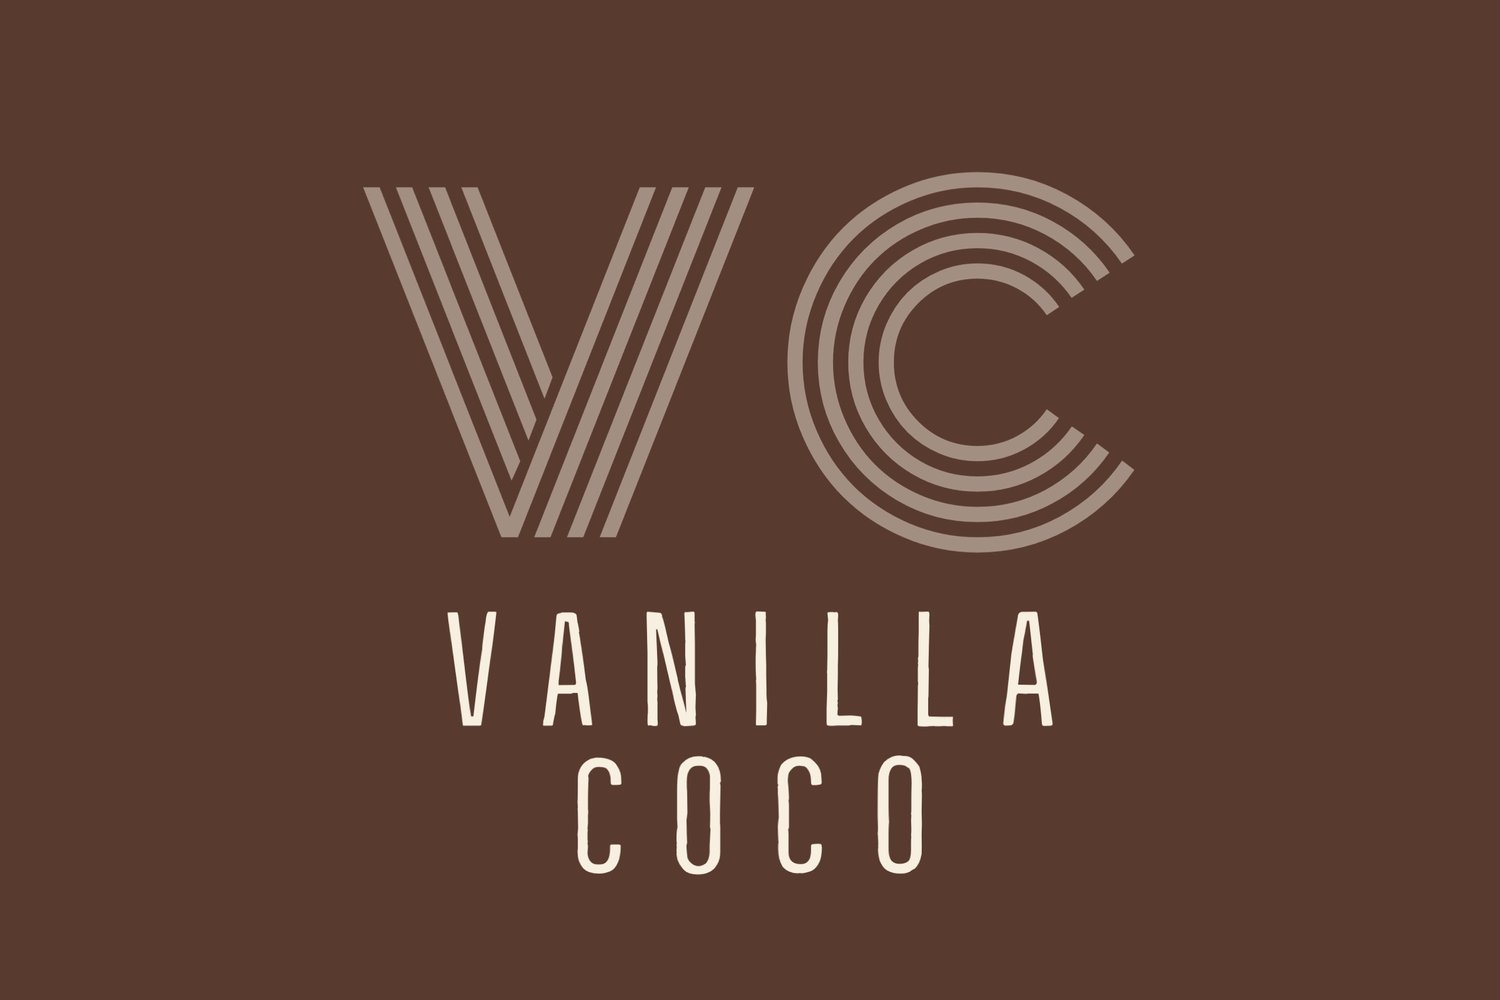 Vanilla Coco